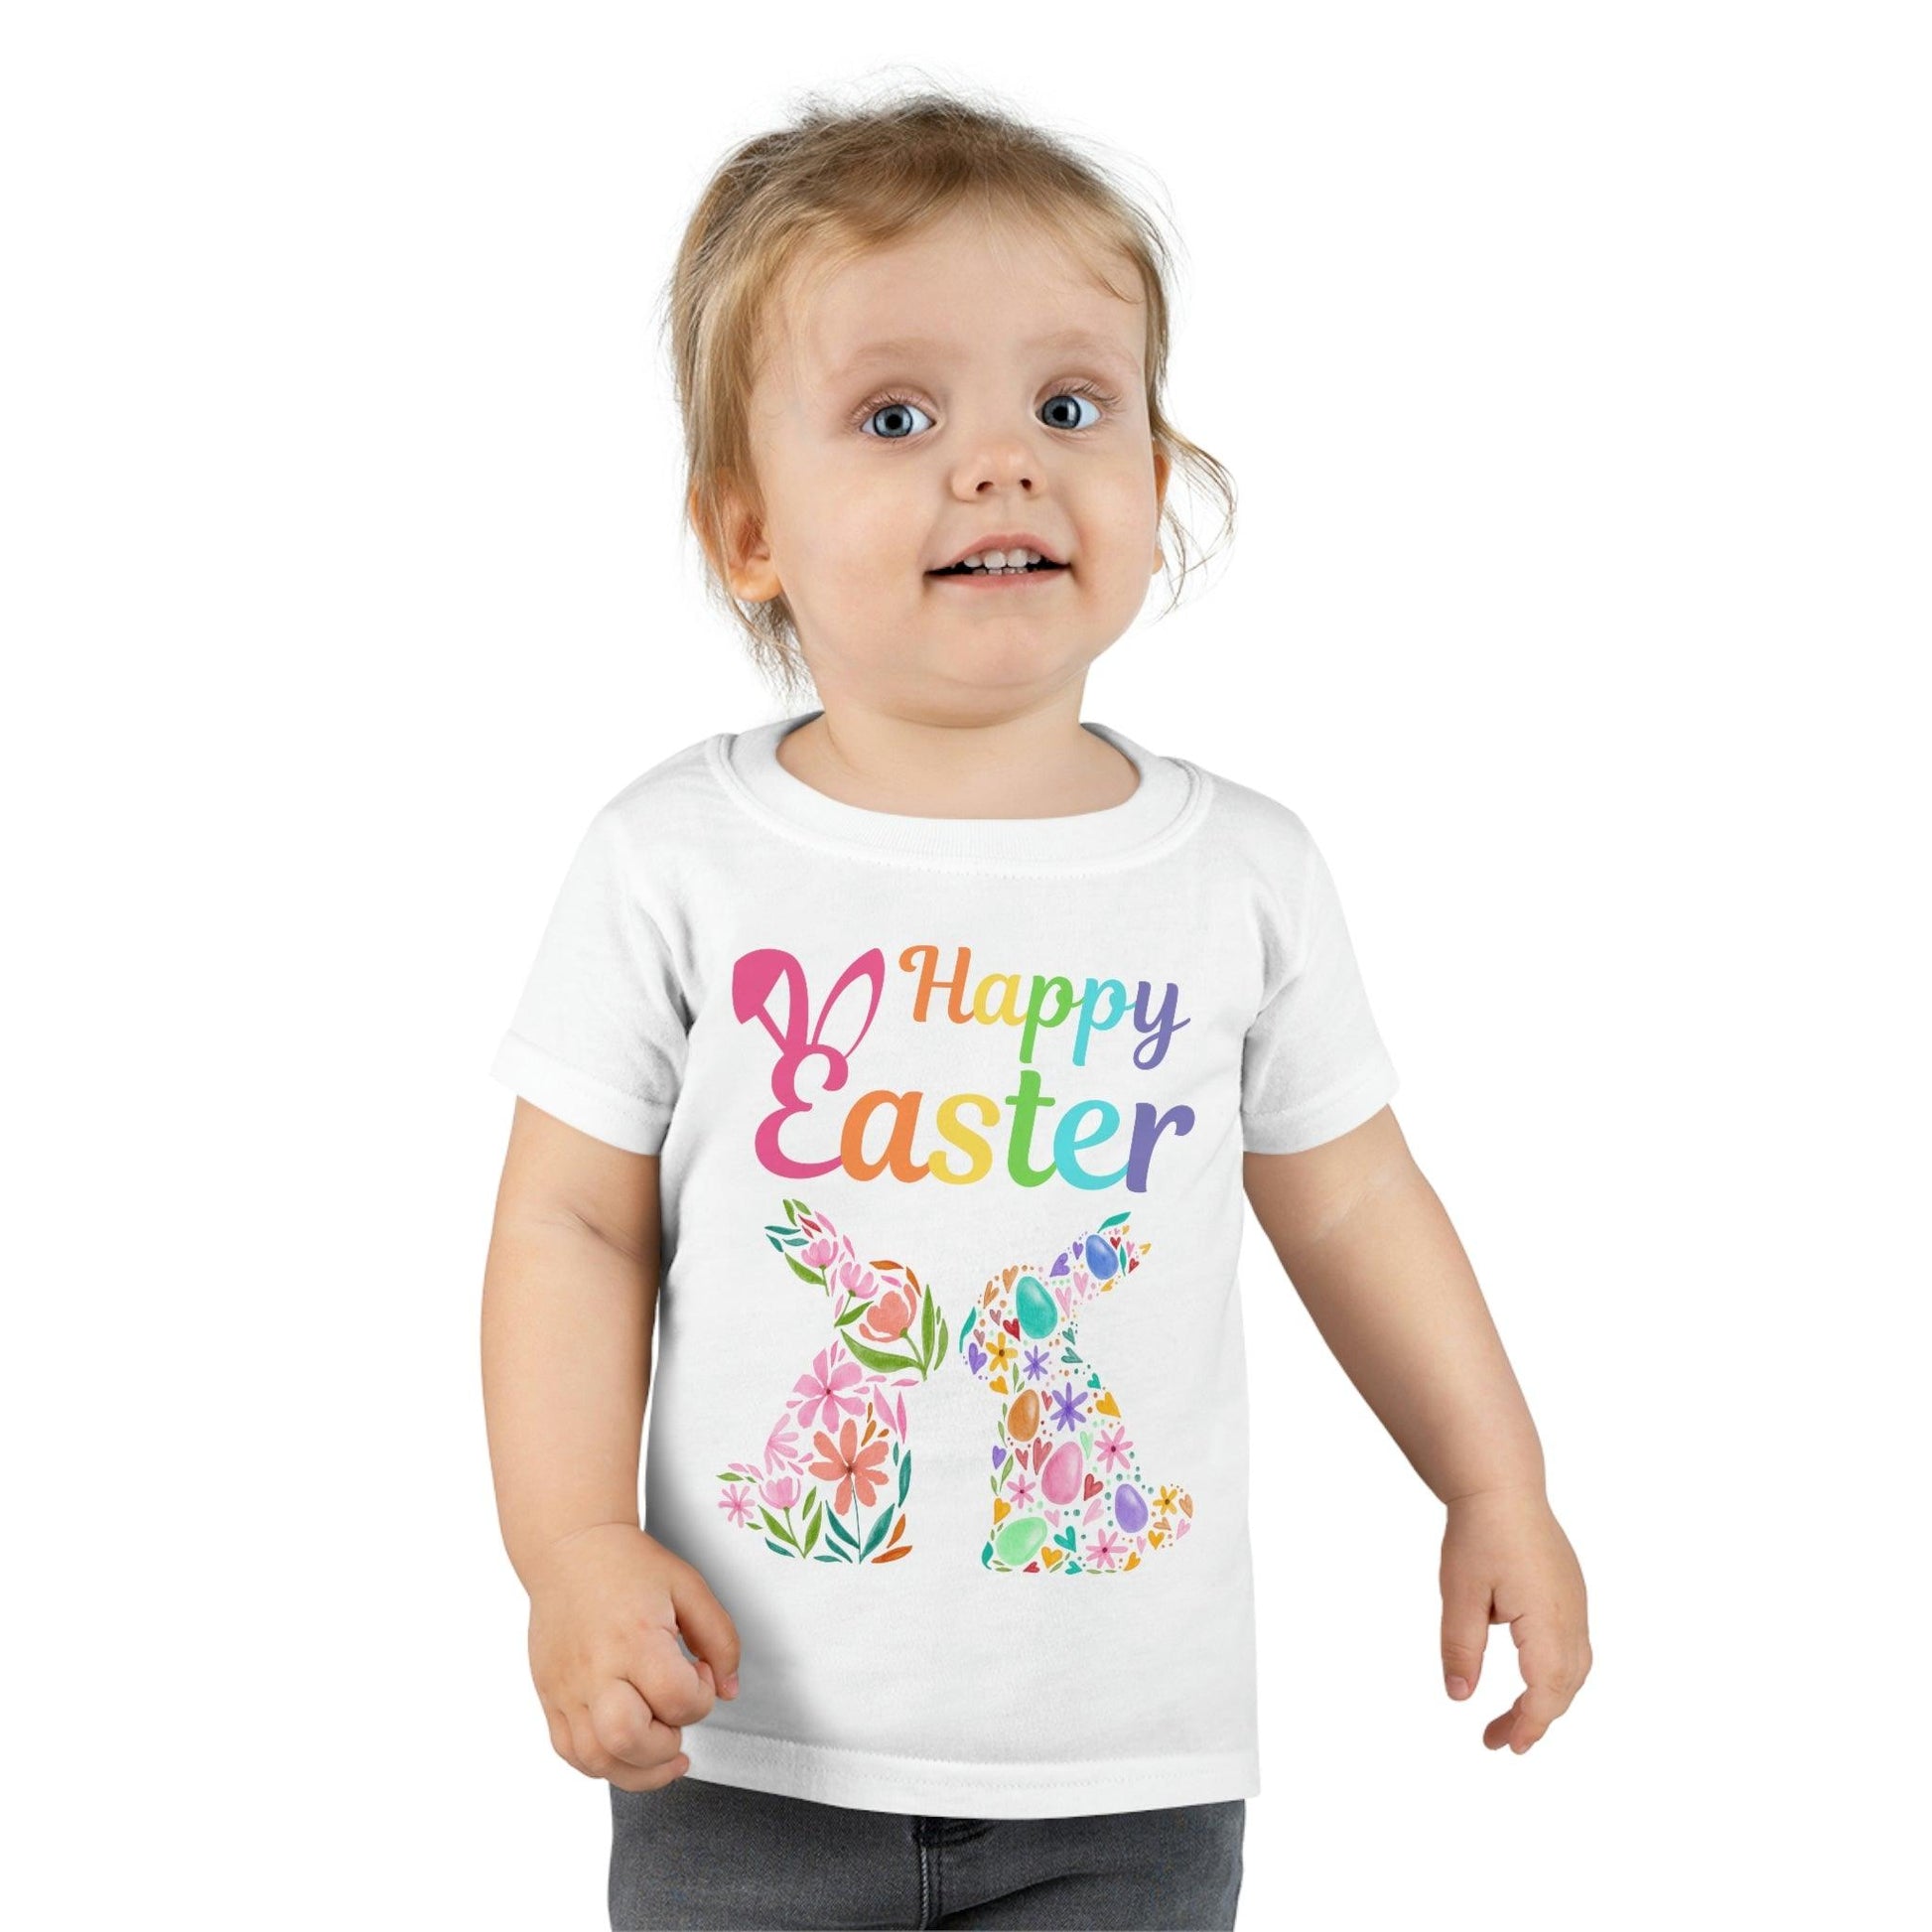 Baby girl easter shirt Baby boy easter shirt toddler easter Toddler T-shirt baby easter outfit first communion gift happy Easter Shirt gift - Giftsmojo